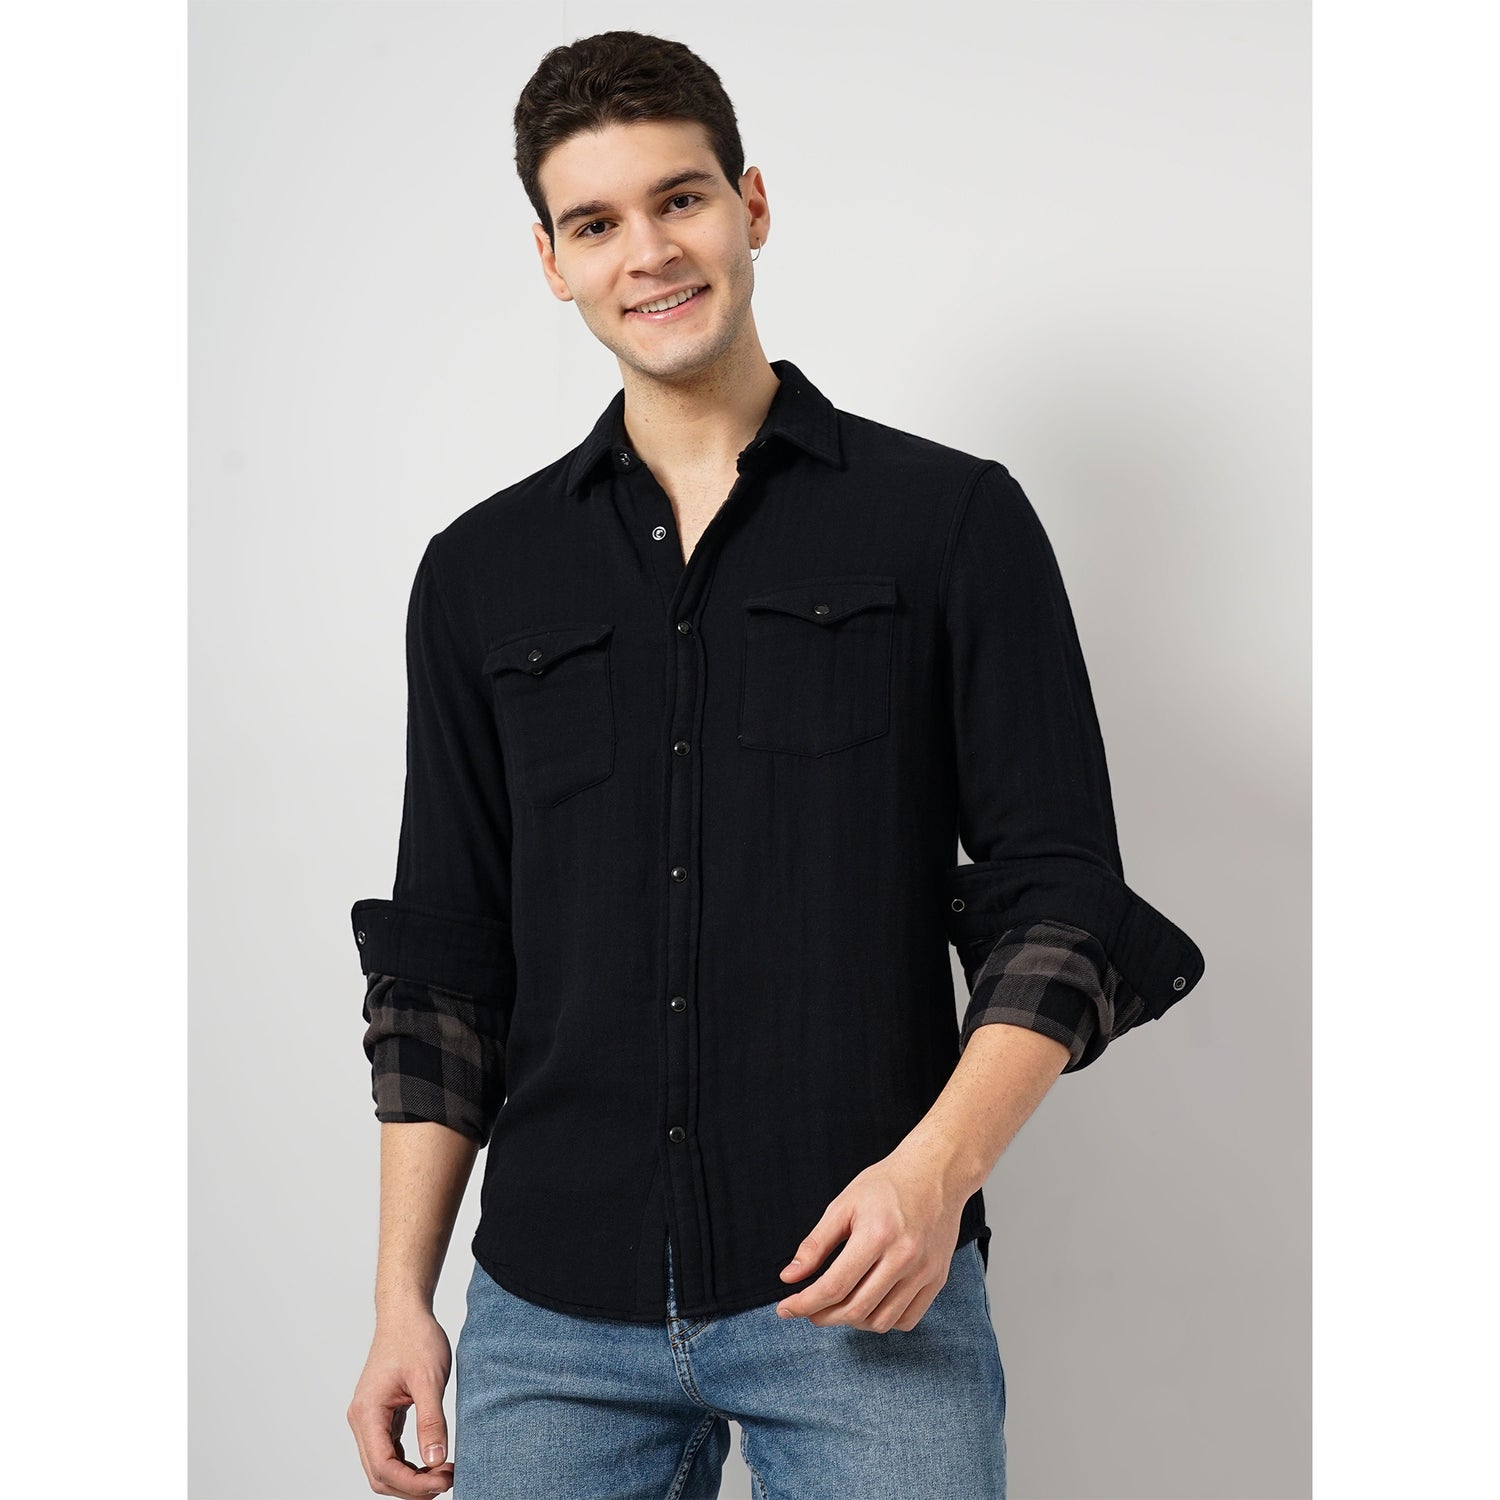 Cotton Black Solid Double Cloth Shirt